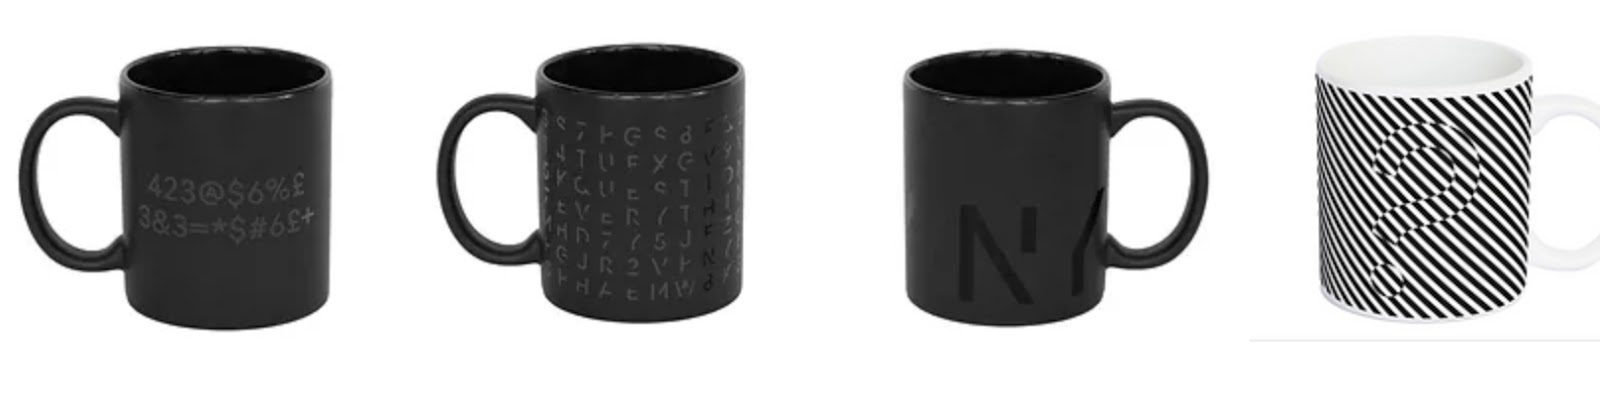 SPYSCAPE coffee mugs